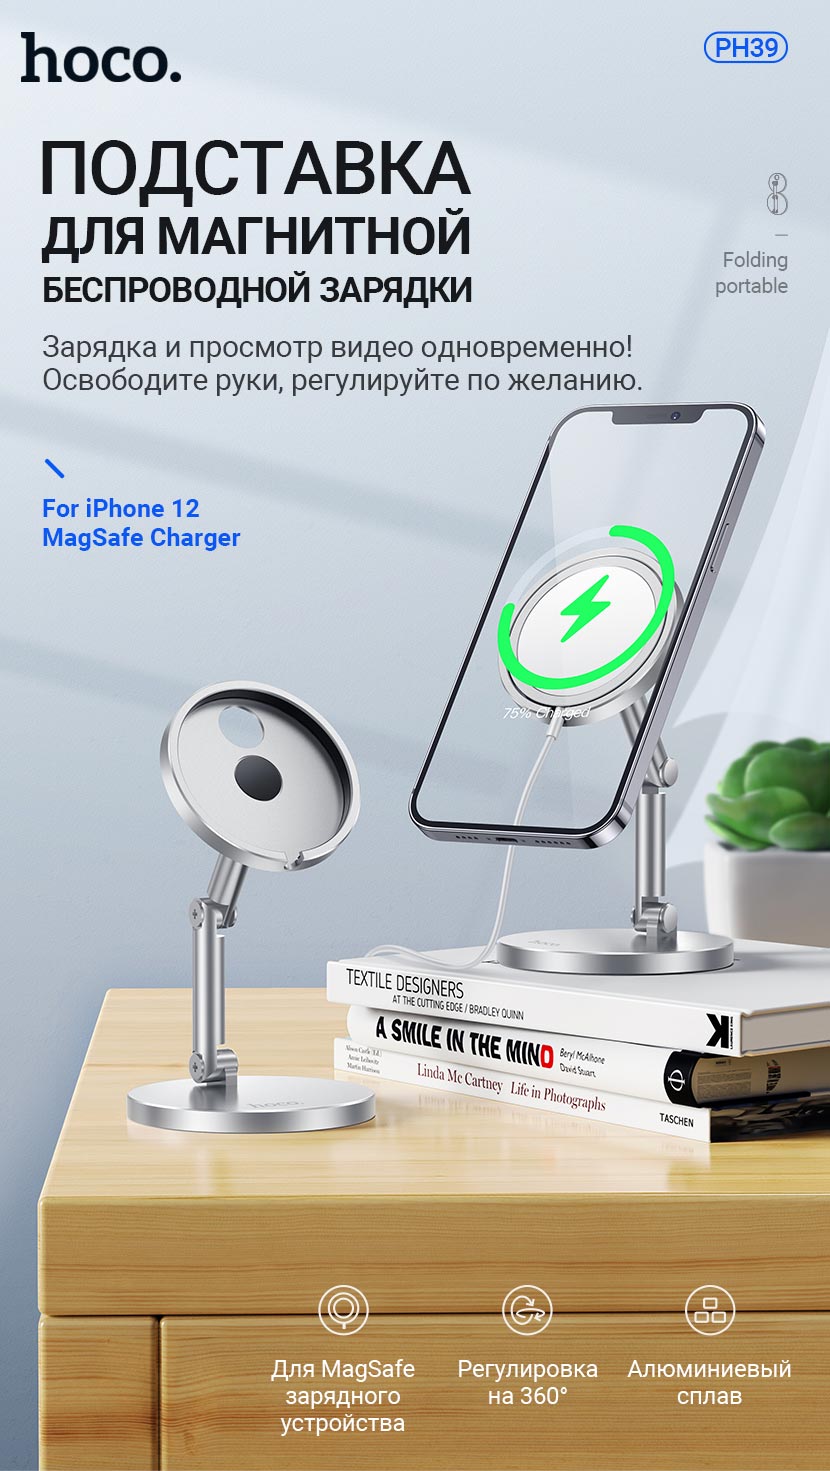 hoco news ph39 daring magnetic desktop stand with wireless charging ru